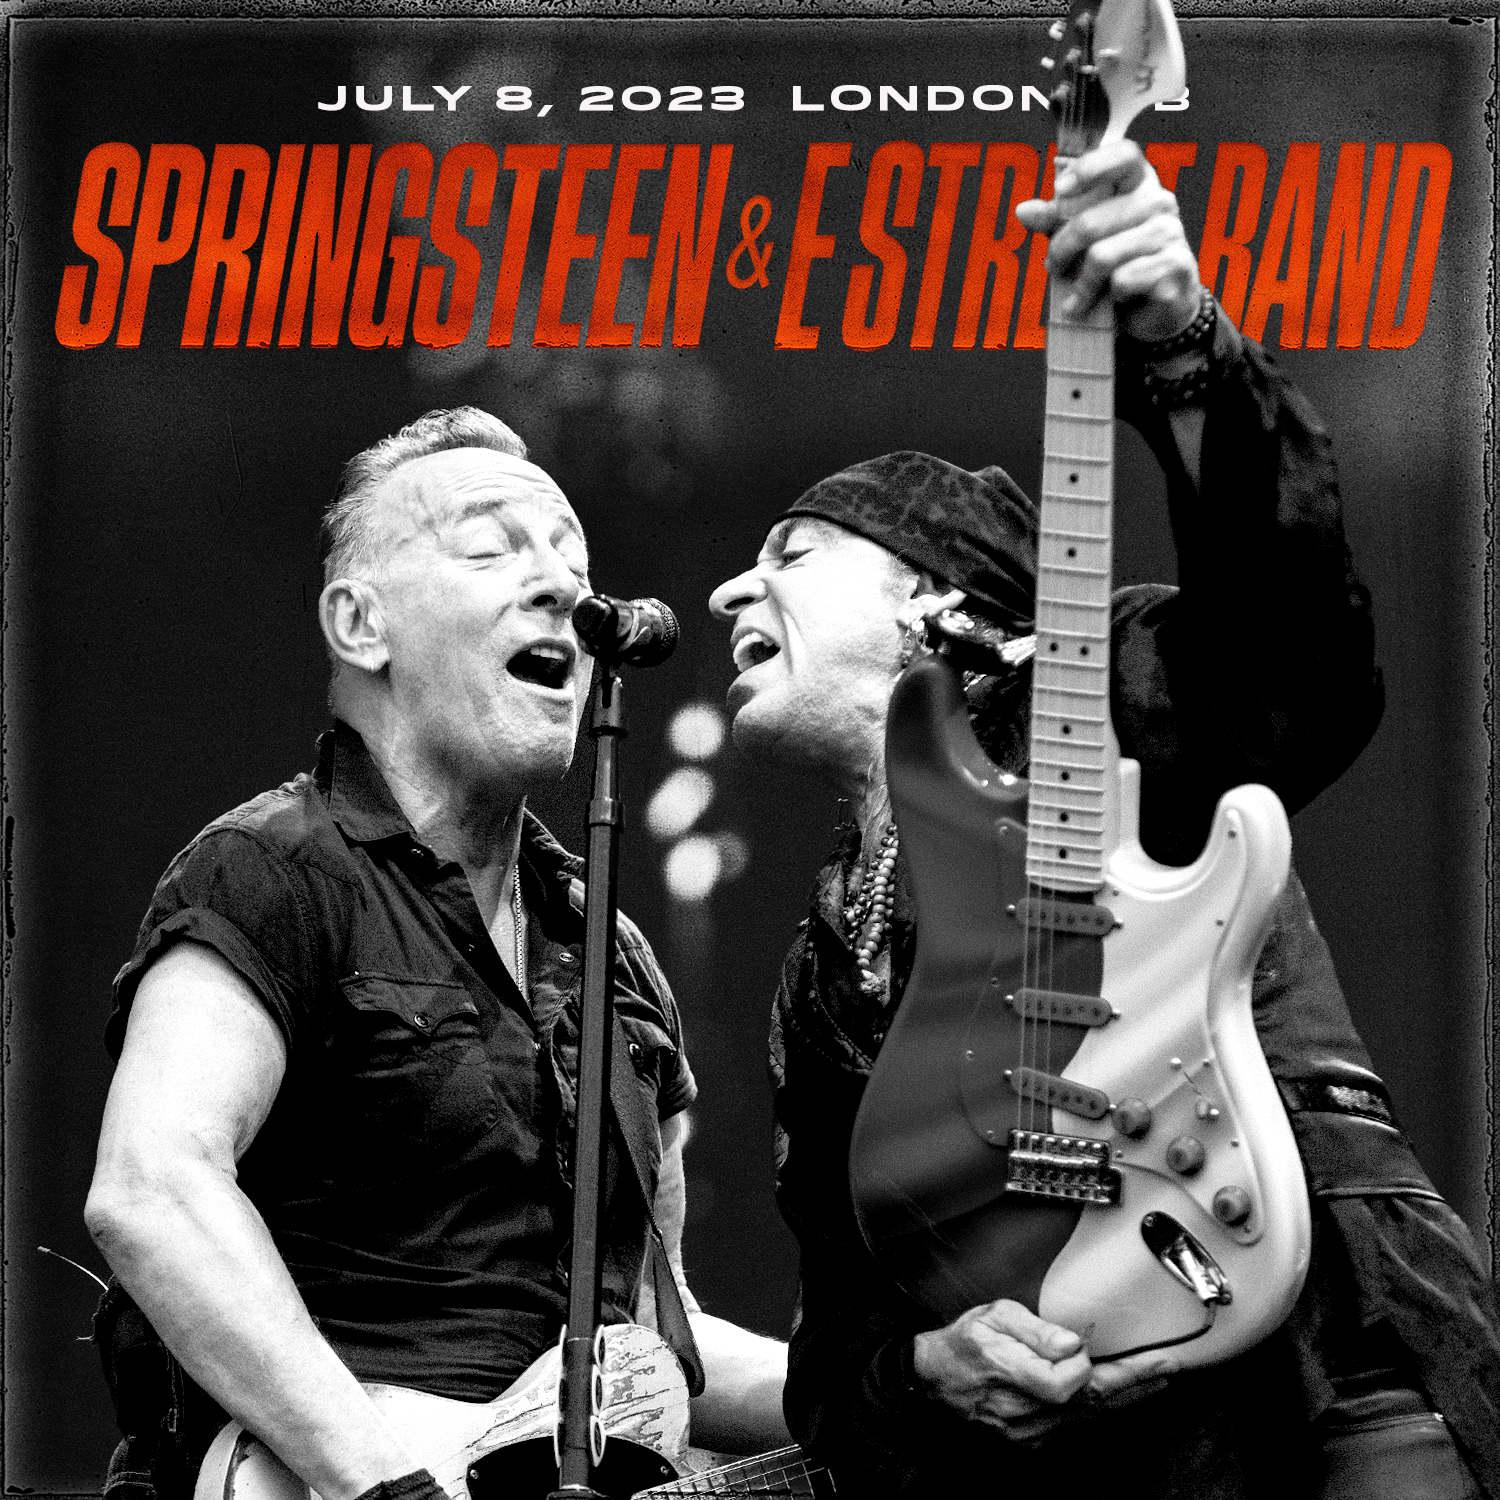 Bruce Springsteen & The E Street Band - 2023 - 8 July - BST Hyde Park, London, UK